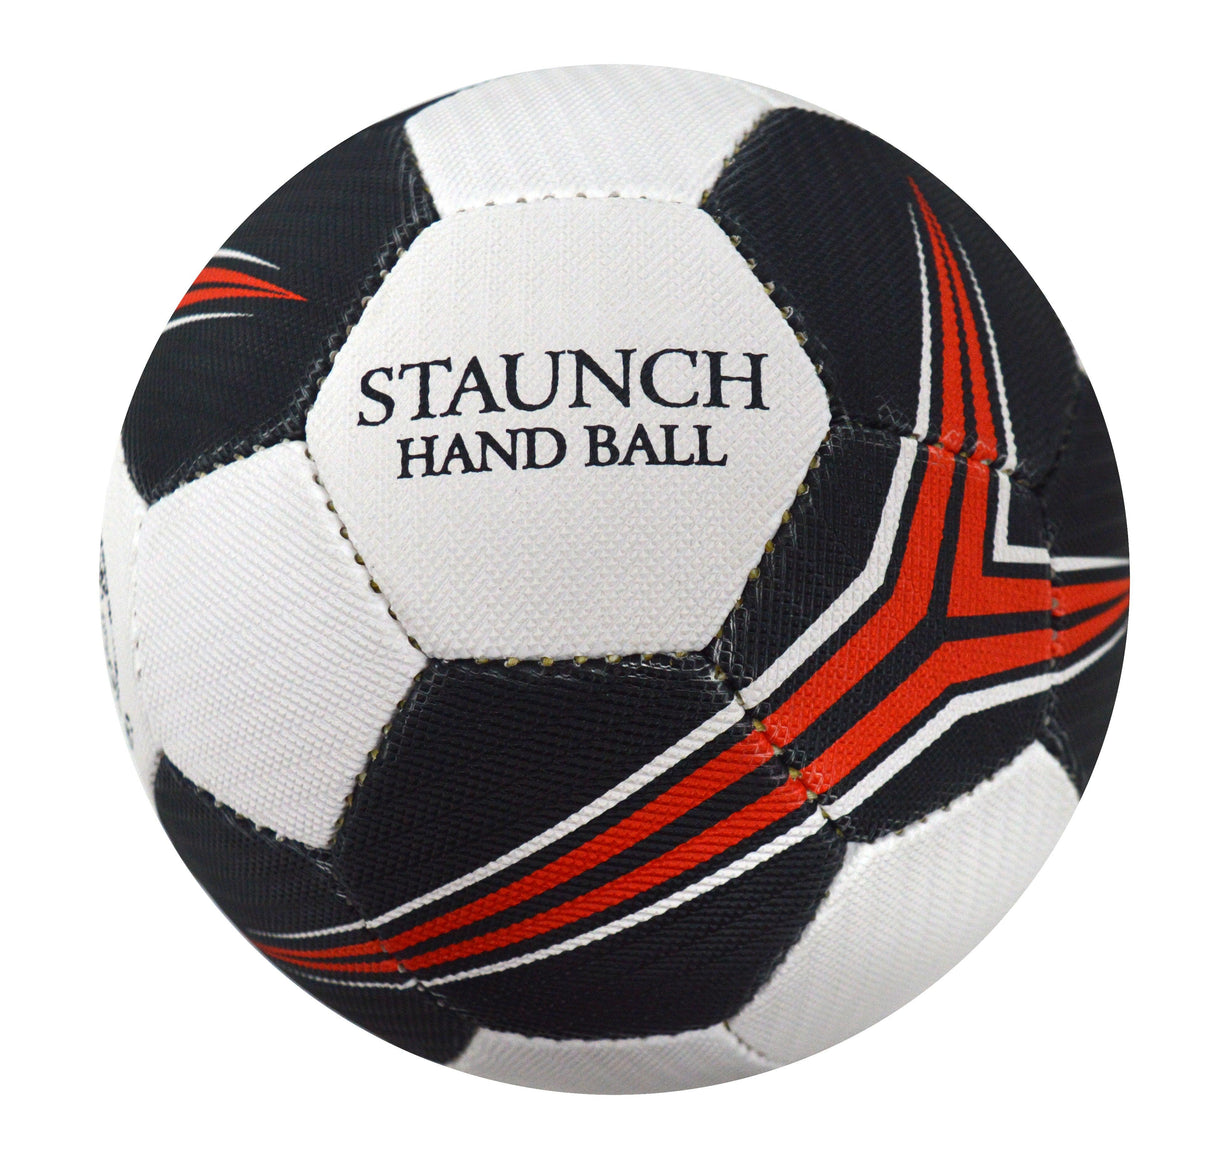 INS Staunch Handball - Mill Sports 